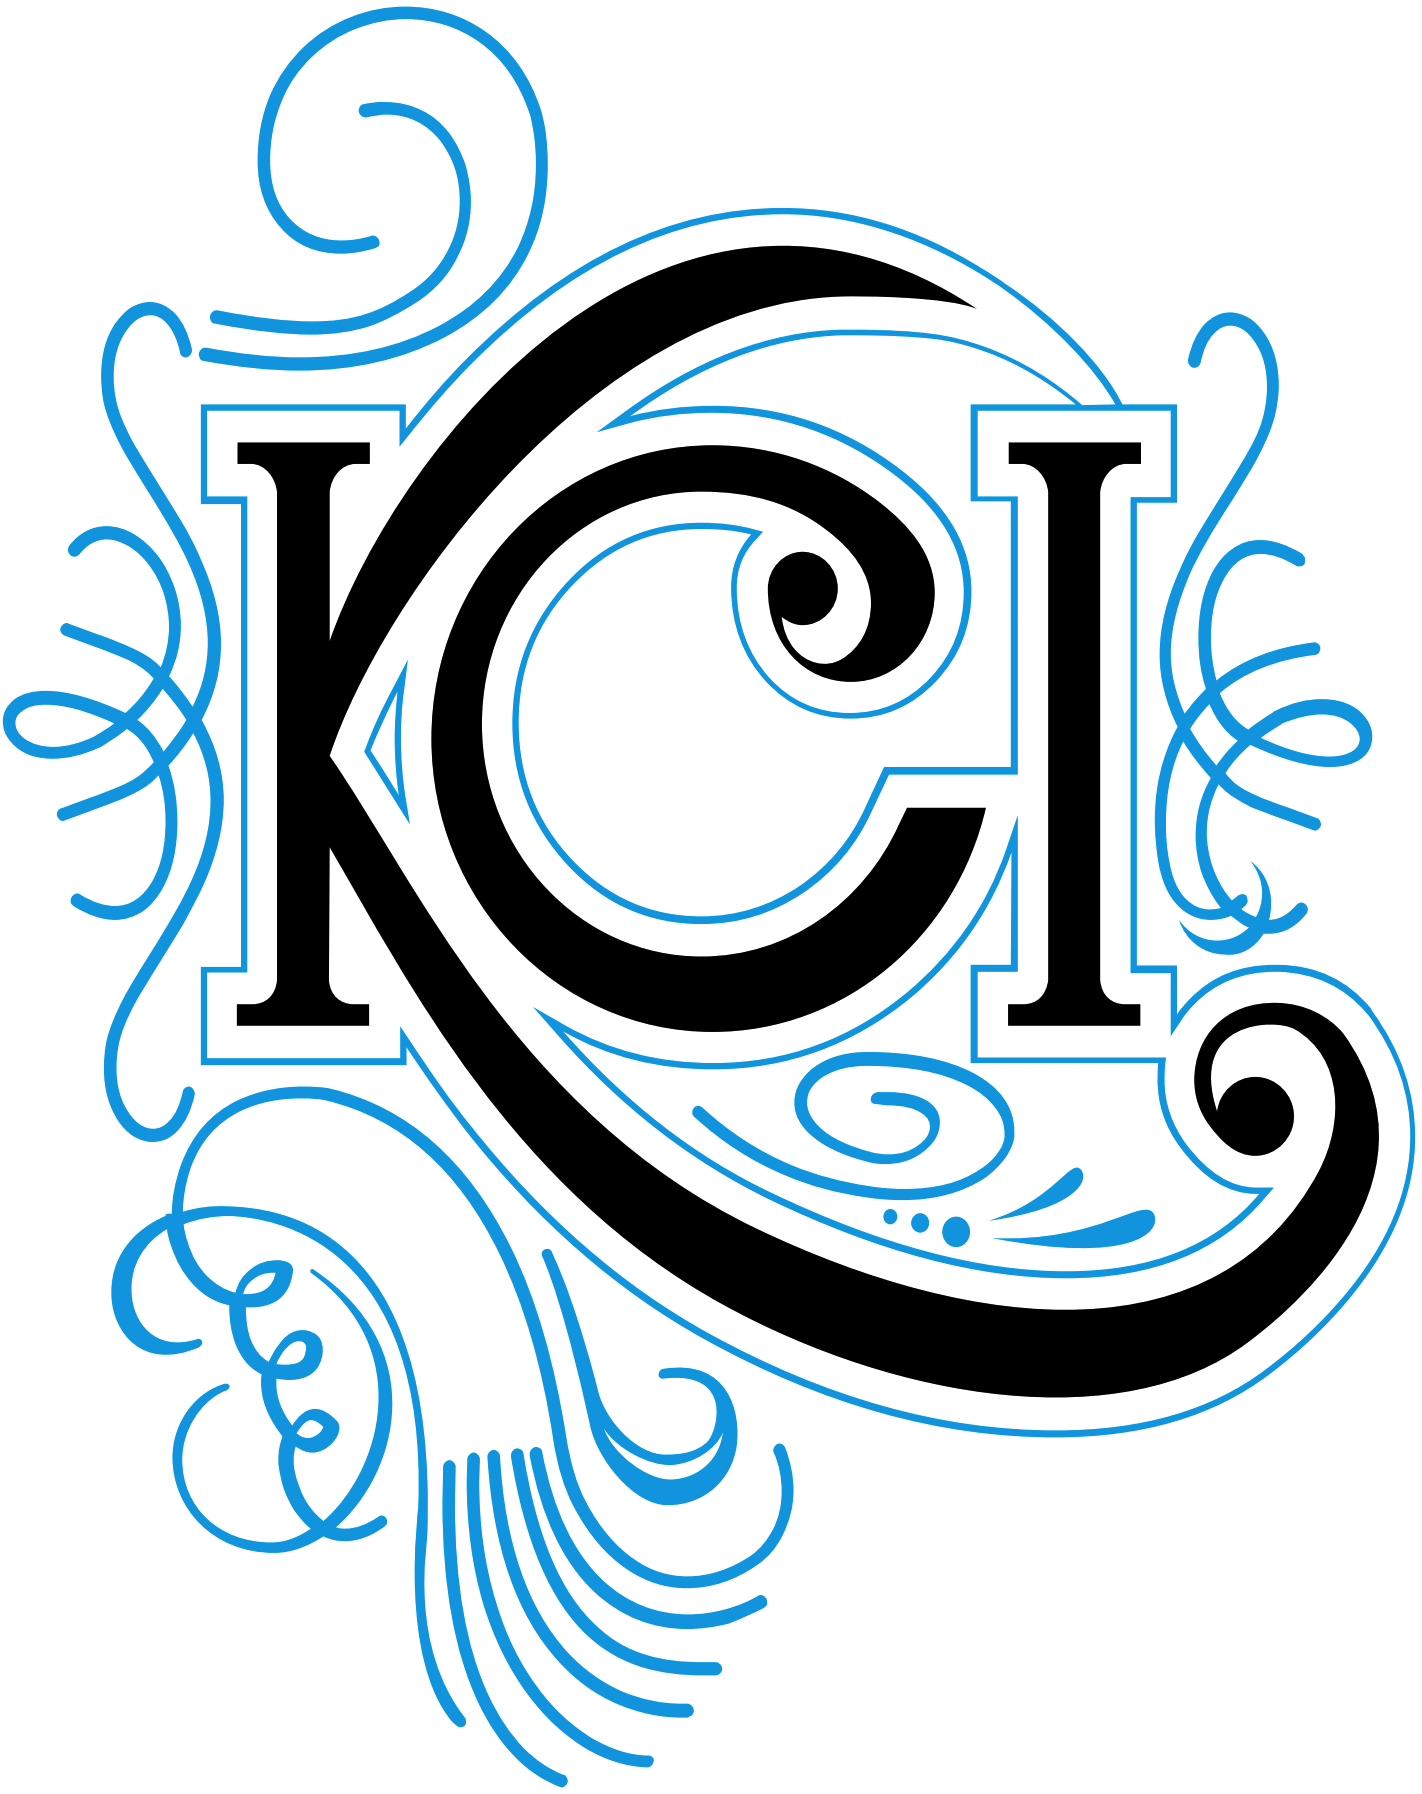 KCI General Contractors